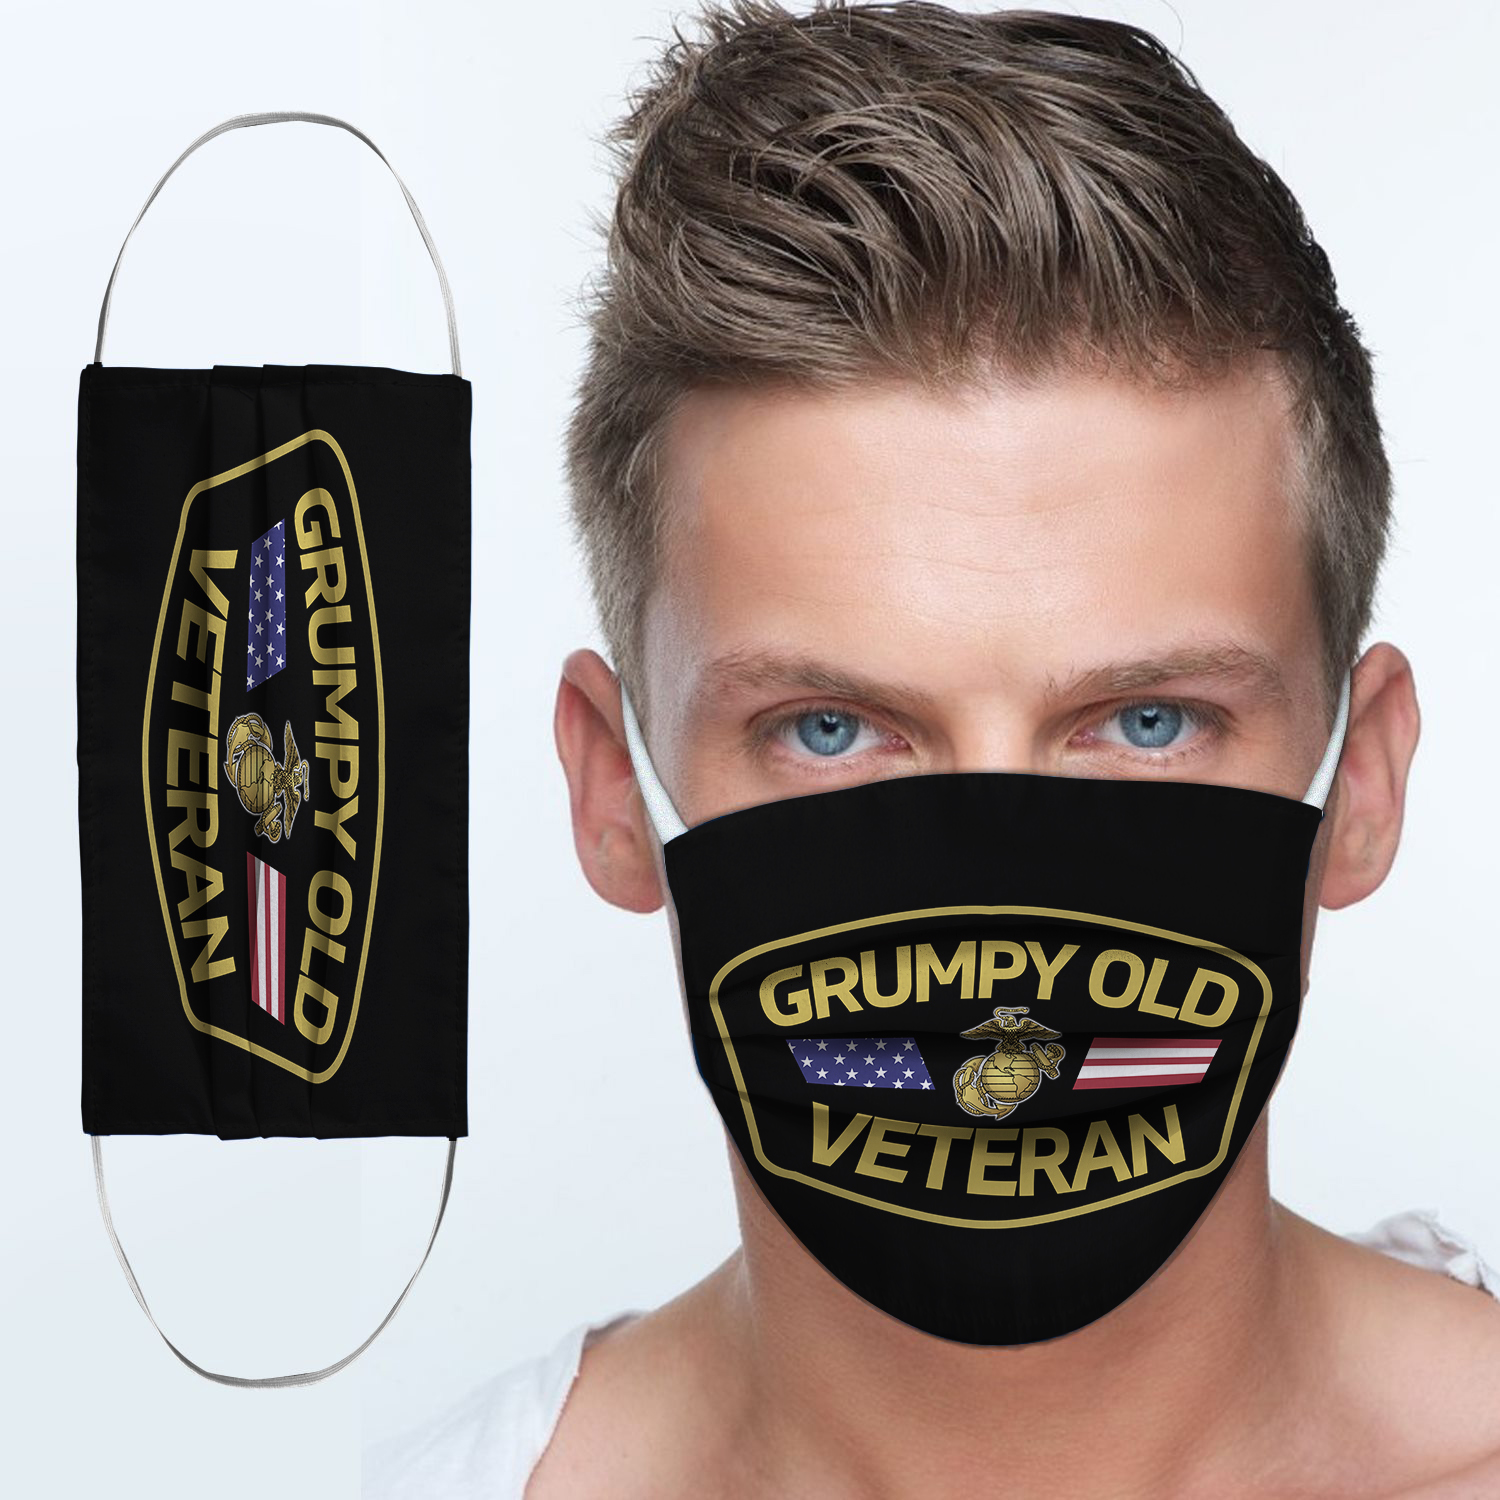 Grumpy old us marine corps veteran anti-dust cotton face mask 2